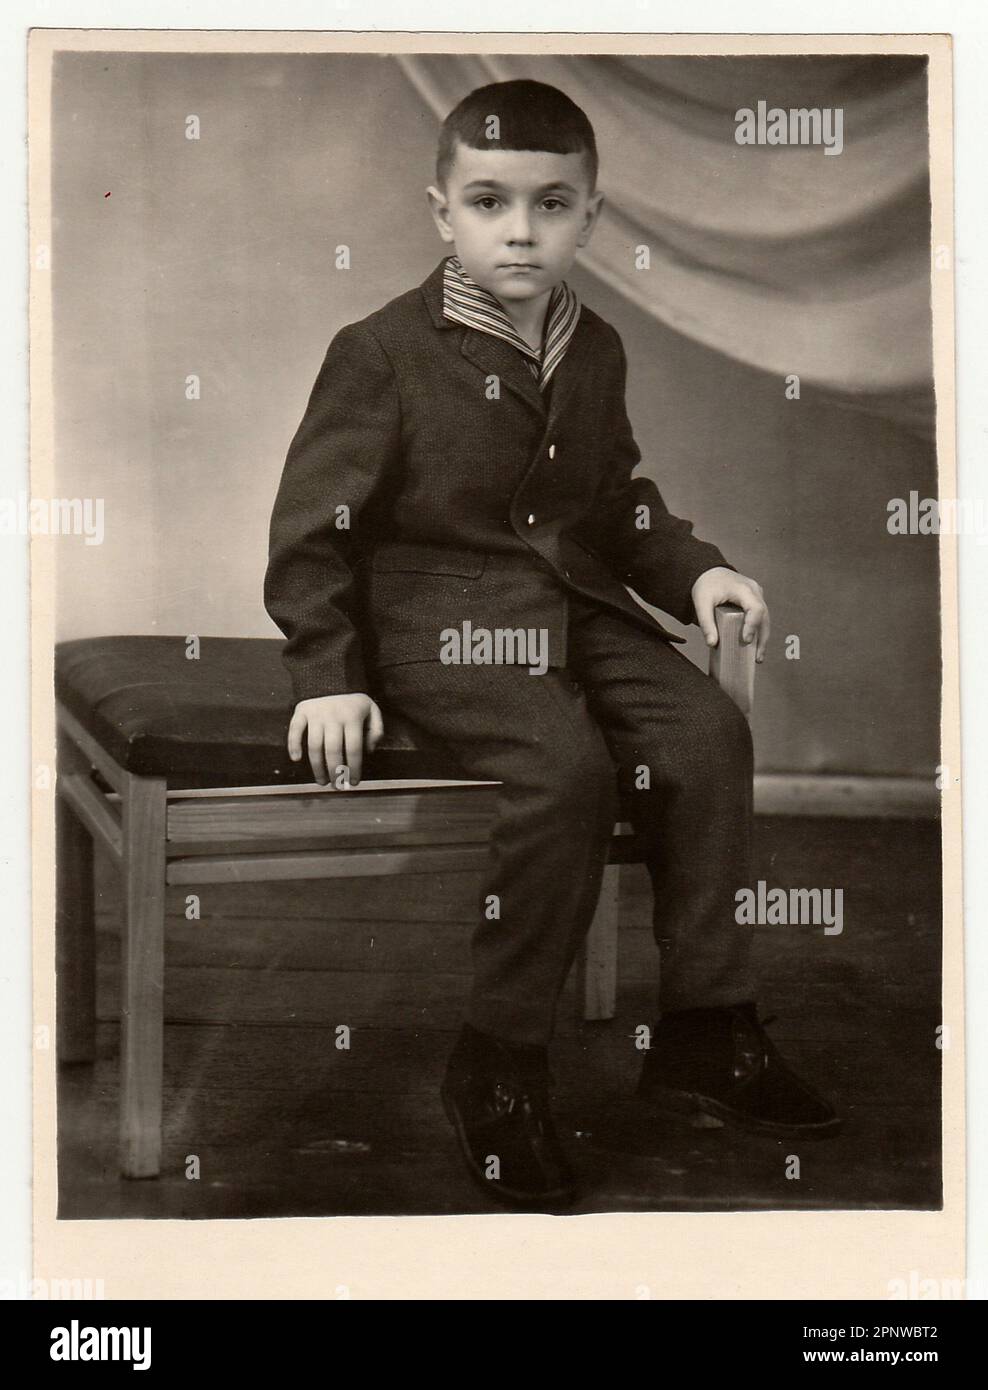 TYUMEN, USSSR - CIRCA 1950s: Vintage studio photo shows a small boy. Stock Photo